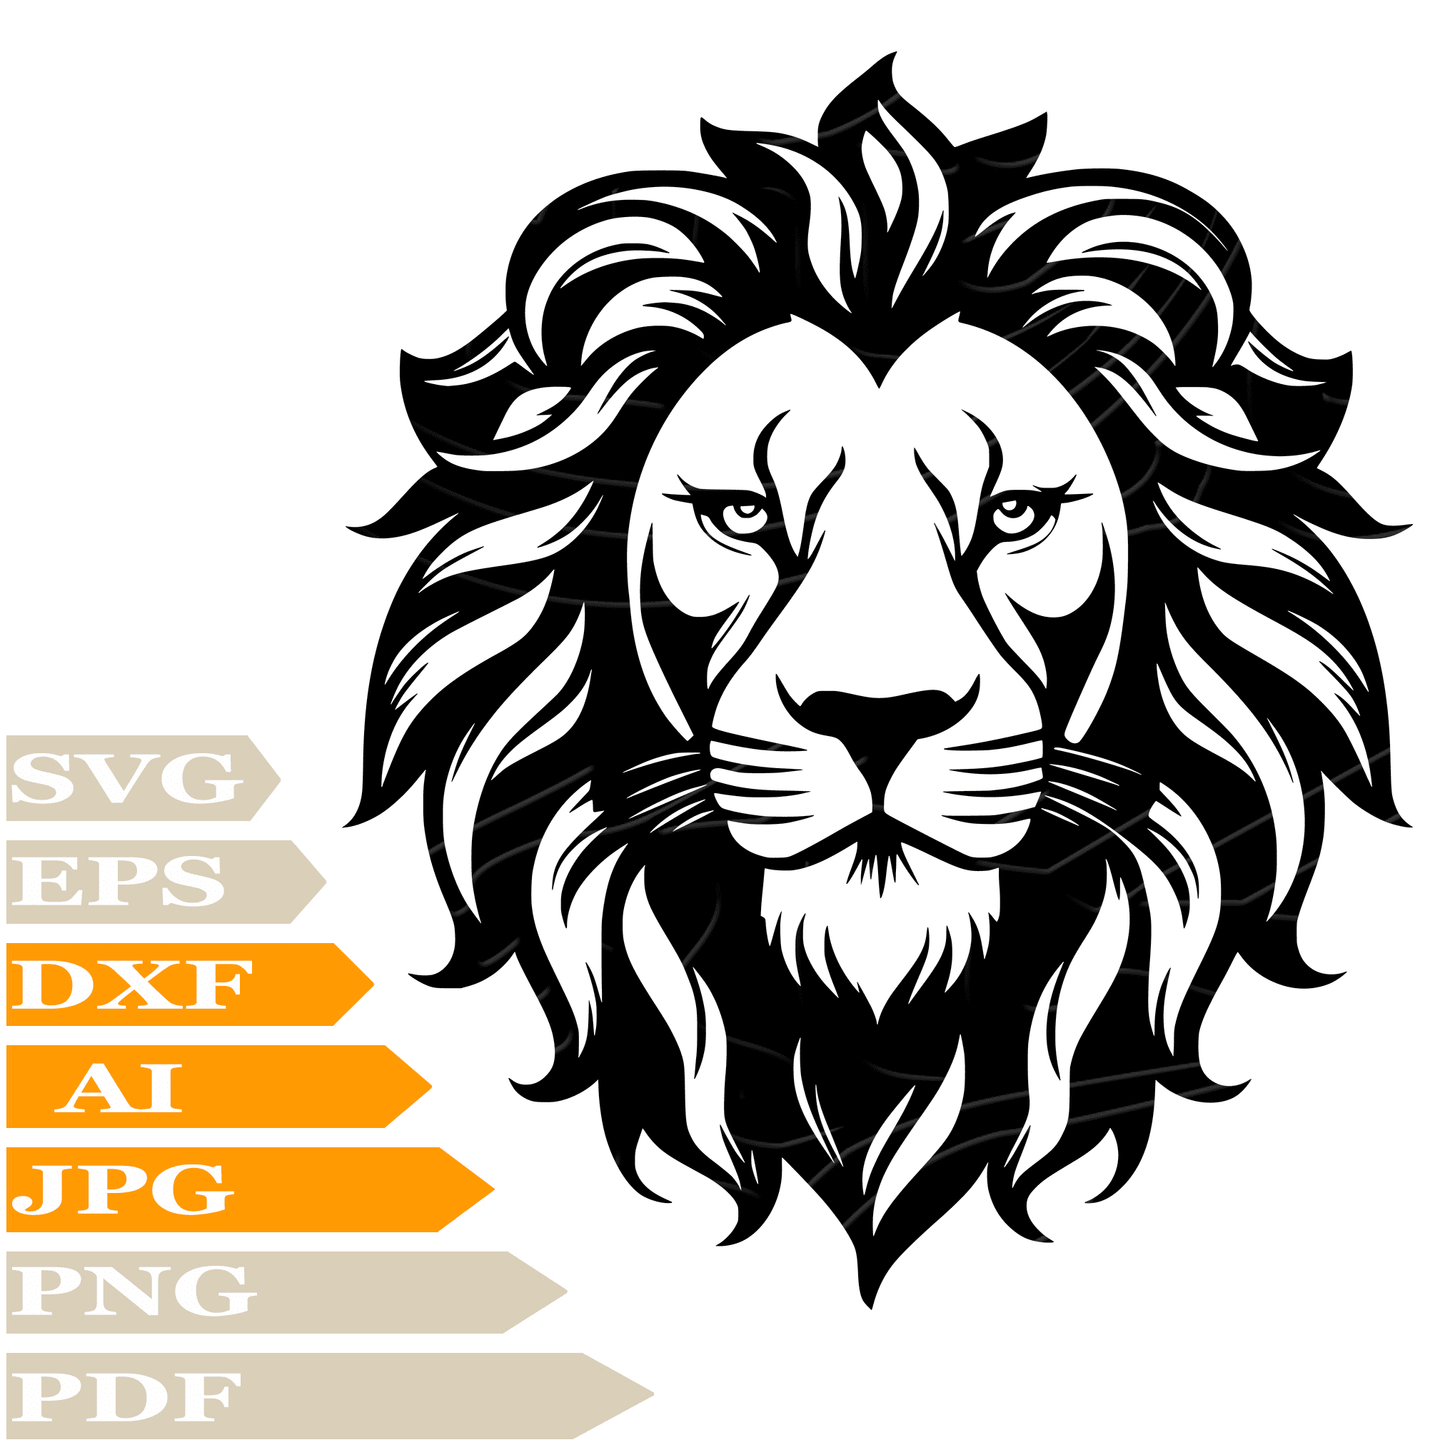 sofvintage-Lion SVG-Lion Head SVG Design-wild Animals SVG File-Wild Animals Lion Digital Vector Download-Lion Head PNG-Lion For Cricut-Lion Clip art-Wild Lion Head Image Cut-Lion Head T-Shirt-Lion Wall Sticker-Lion Head For Tattoo-Lion Printable-Wild Lion Head Silhouette